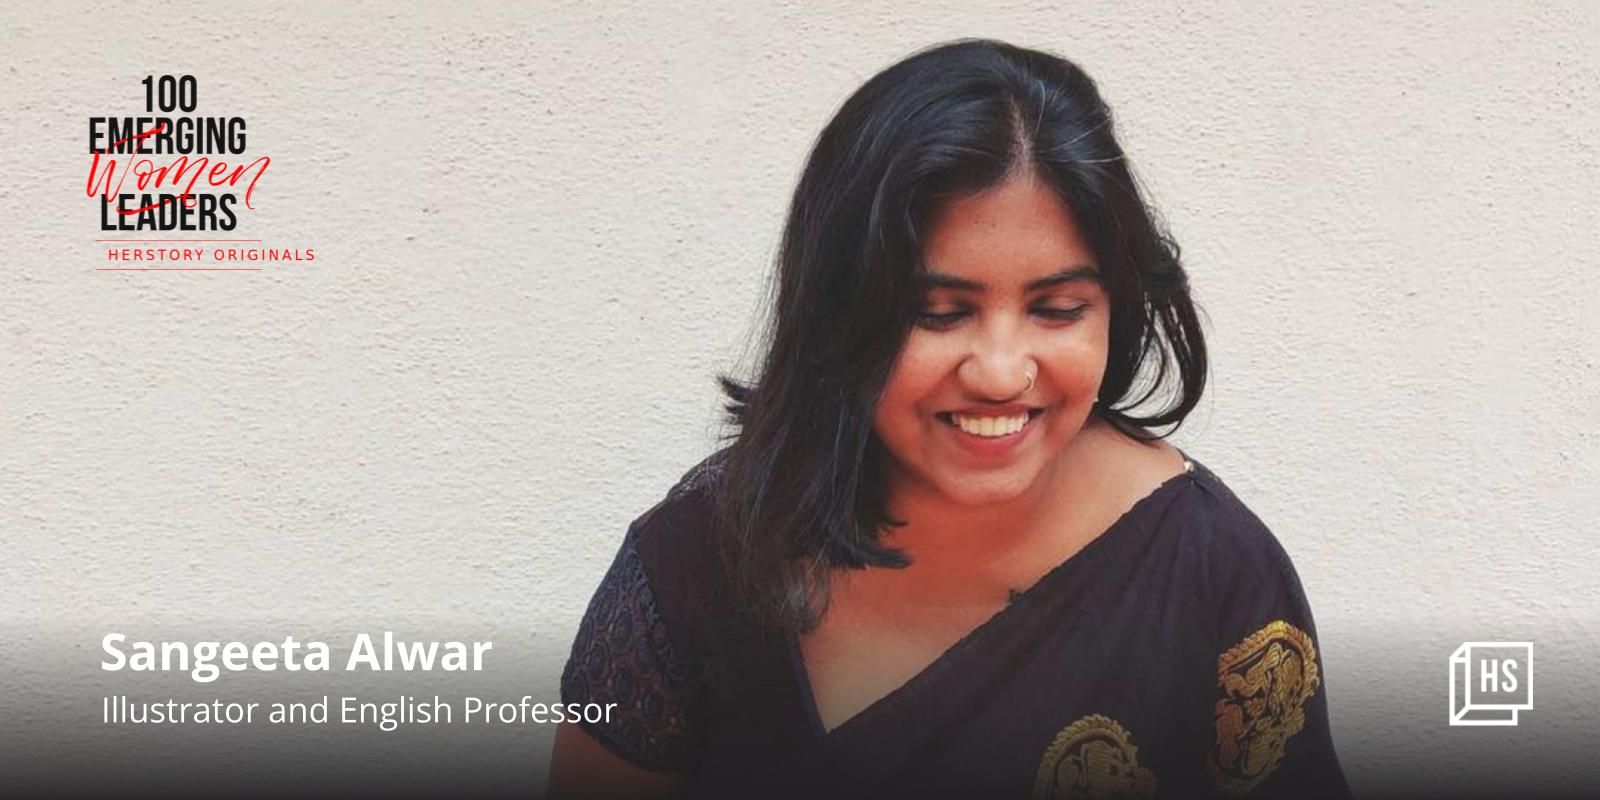 [100 Emerging Women Leaders] Meet Sangeeta Alwar, an English prof and illustrator who reflects on society through art 
